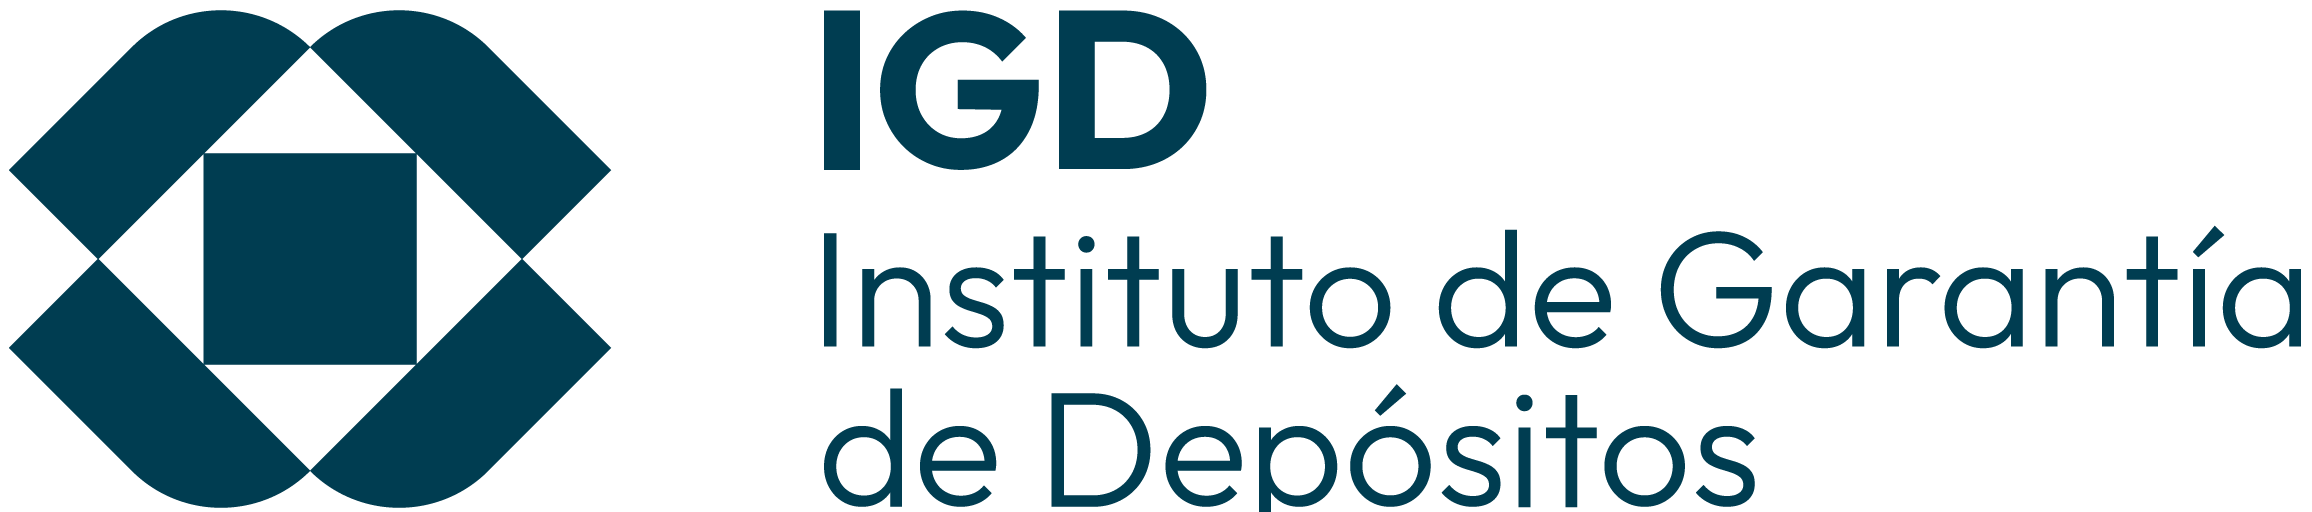 logo-igd